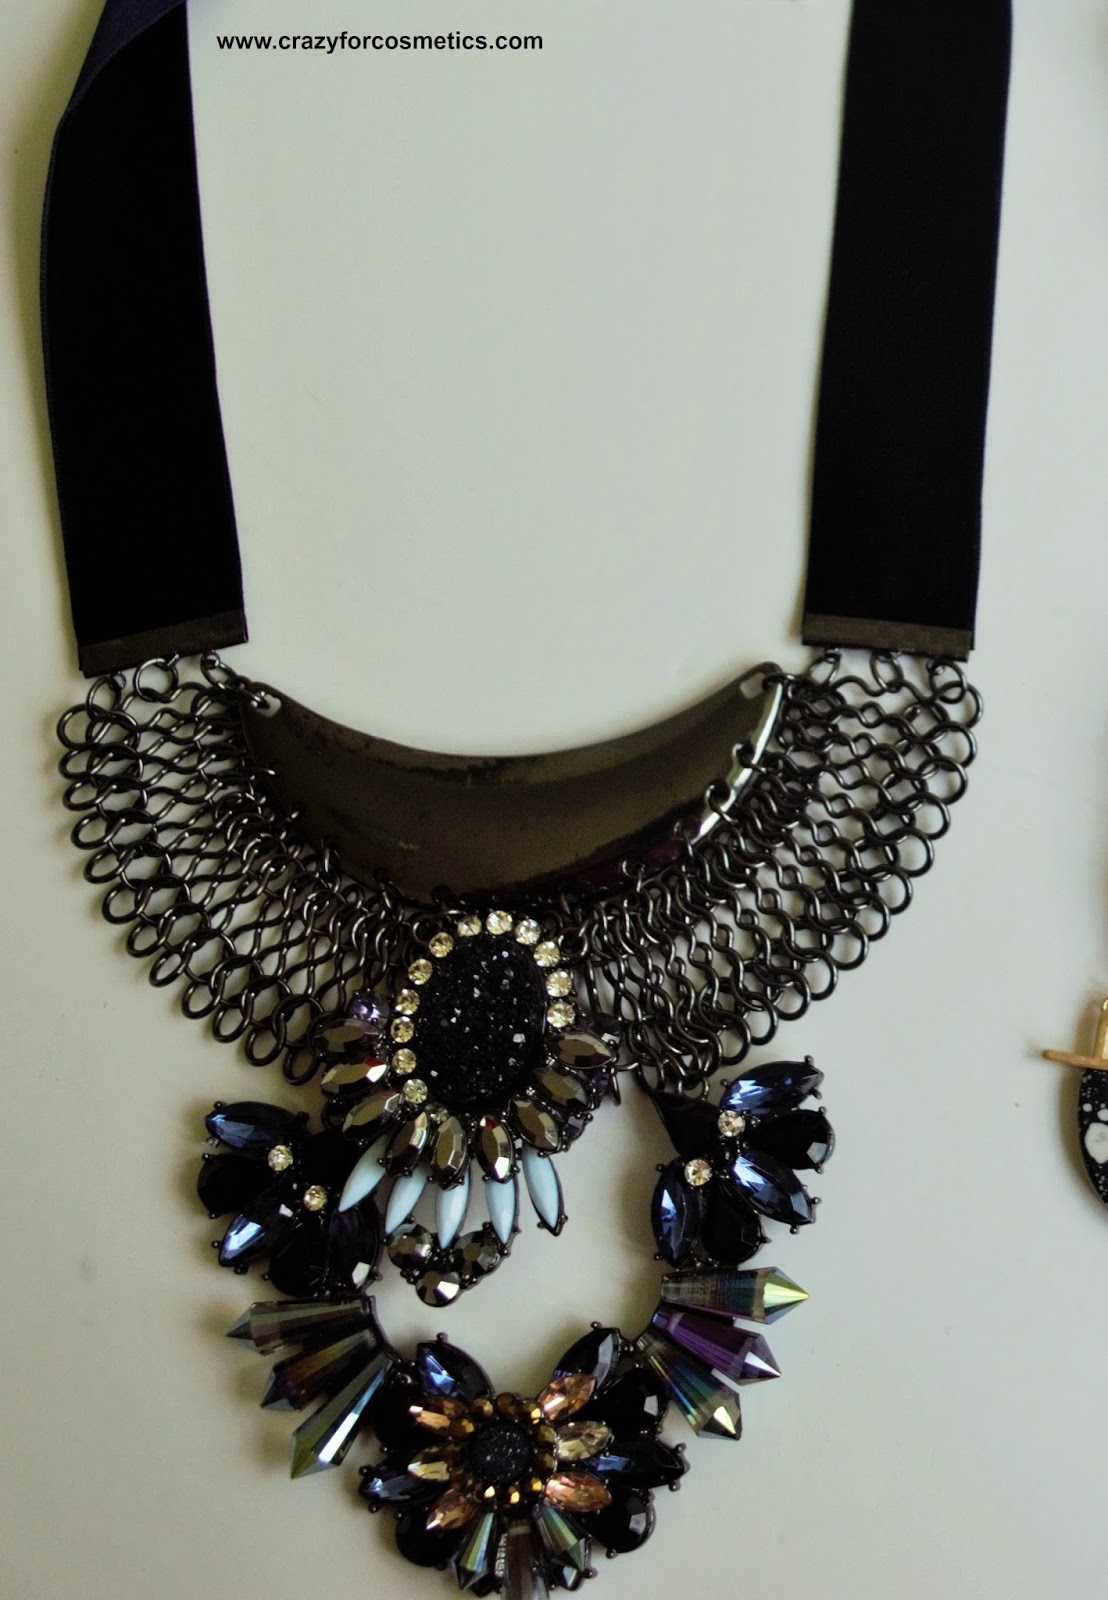 Lovisa: Affordable fashion jewellery in Singapore  Affordable fashion  jewelry, Lovisa jewellery, Jewelry shop